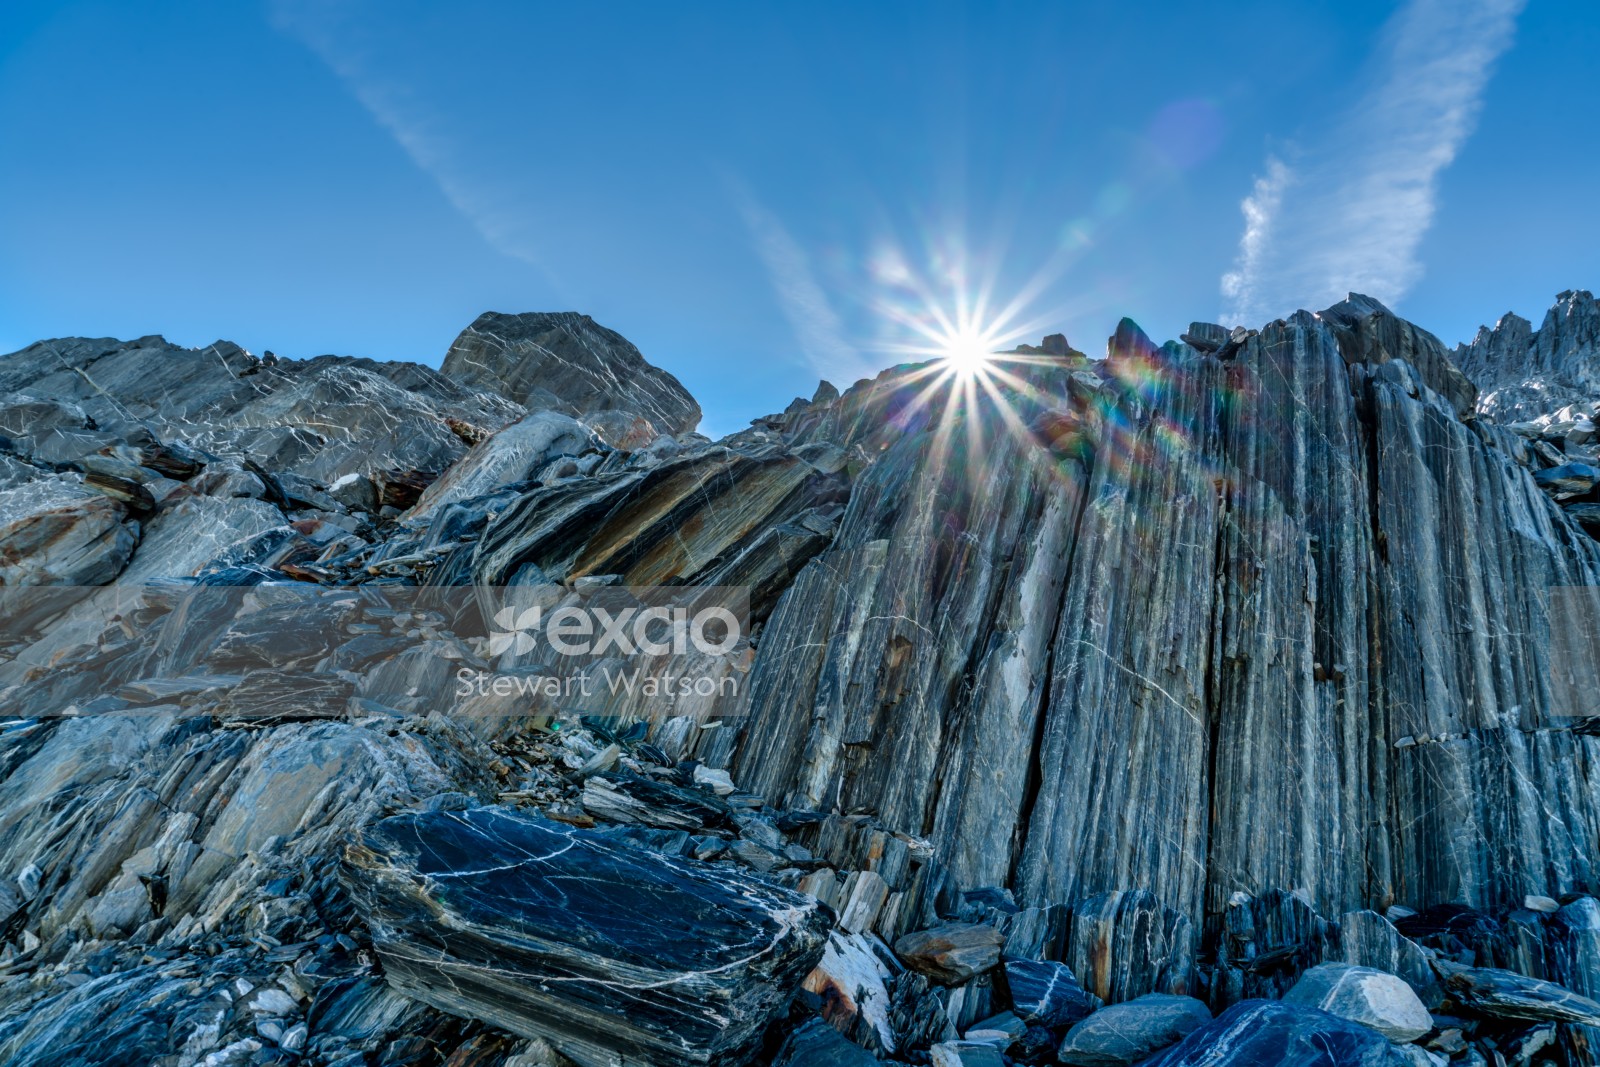 Texture in the rock face  Franz Josef glacier